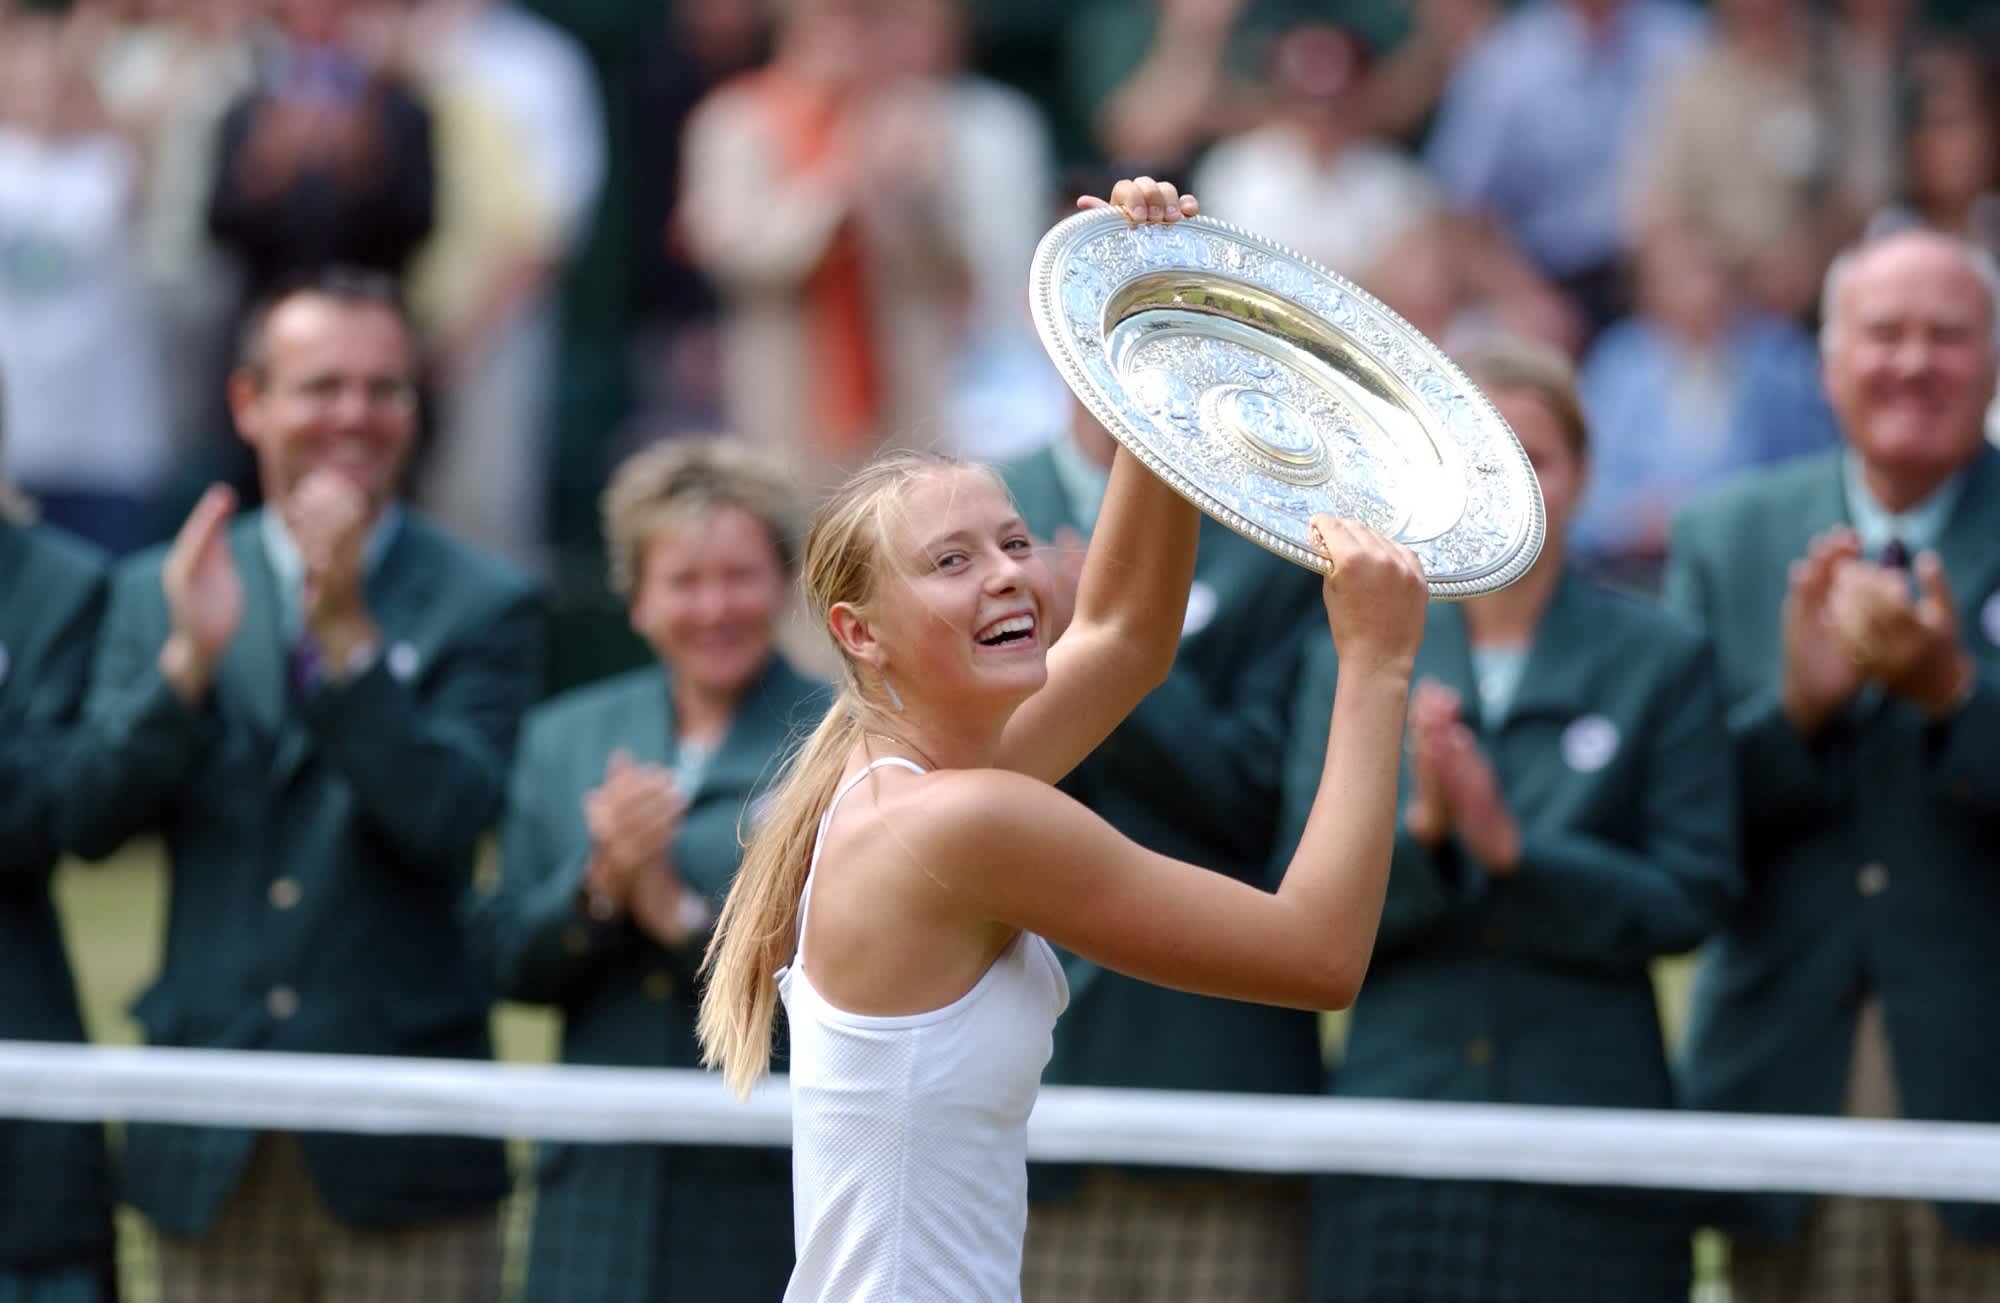 Maria Sharapova won her first Grand Slam at age 17